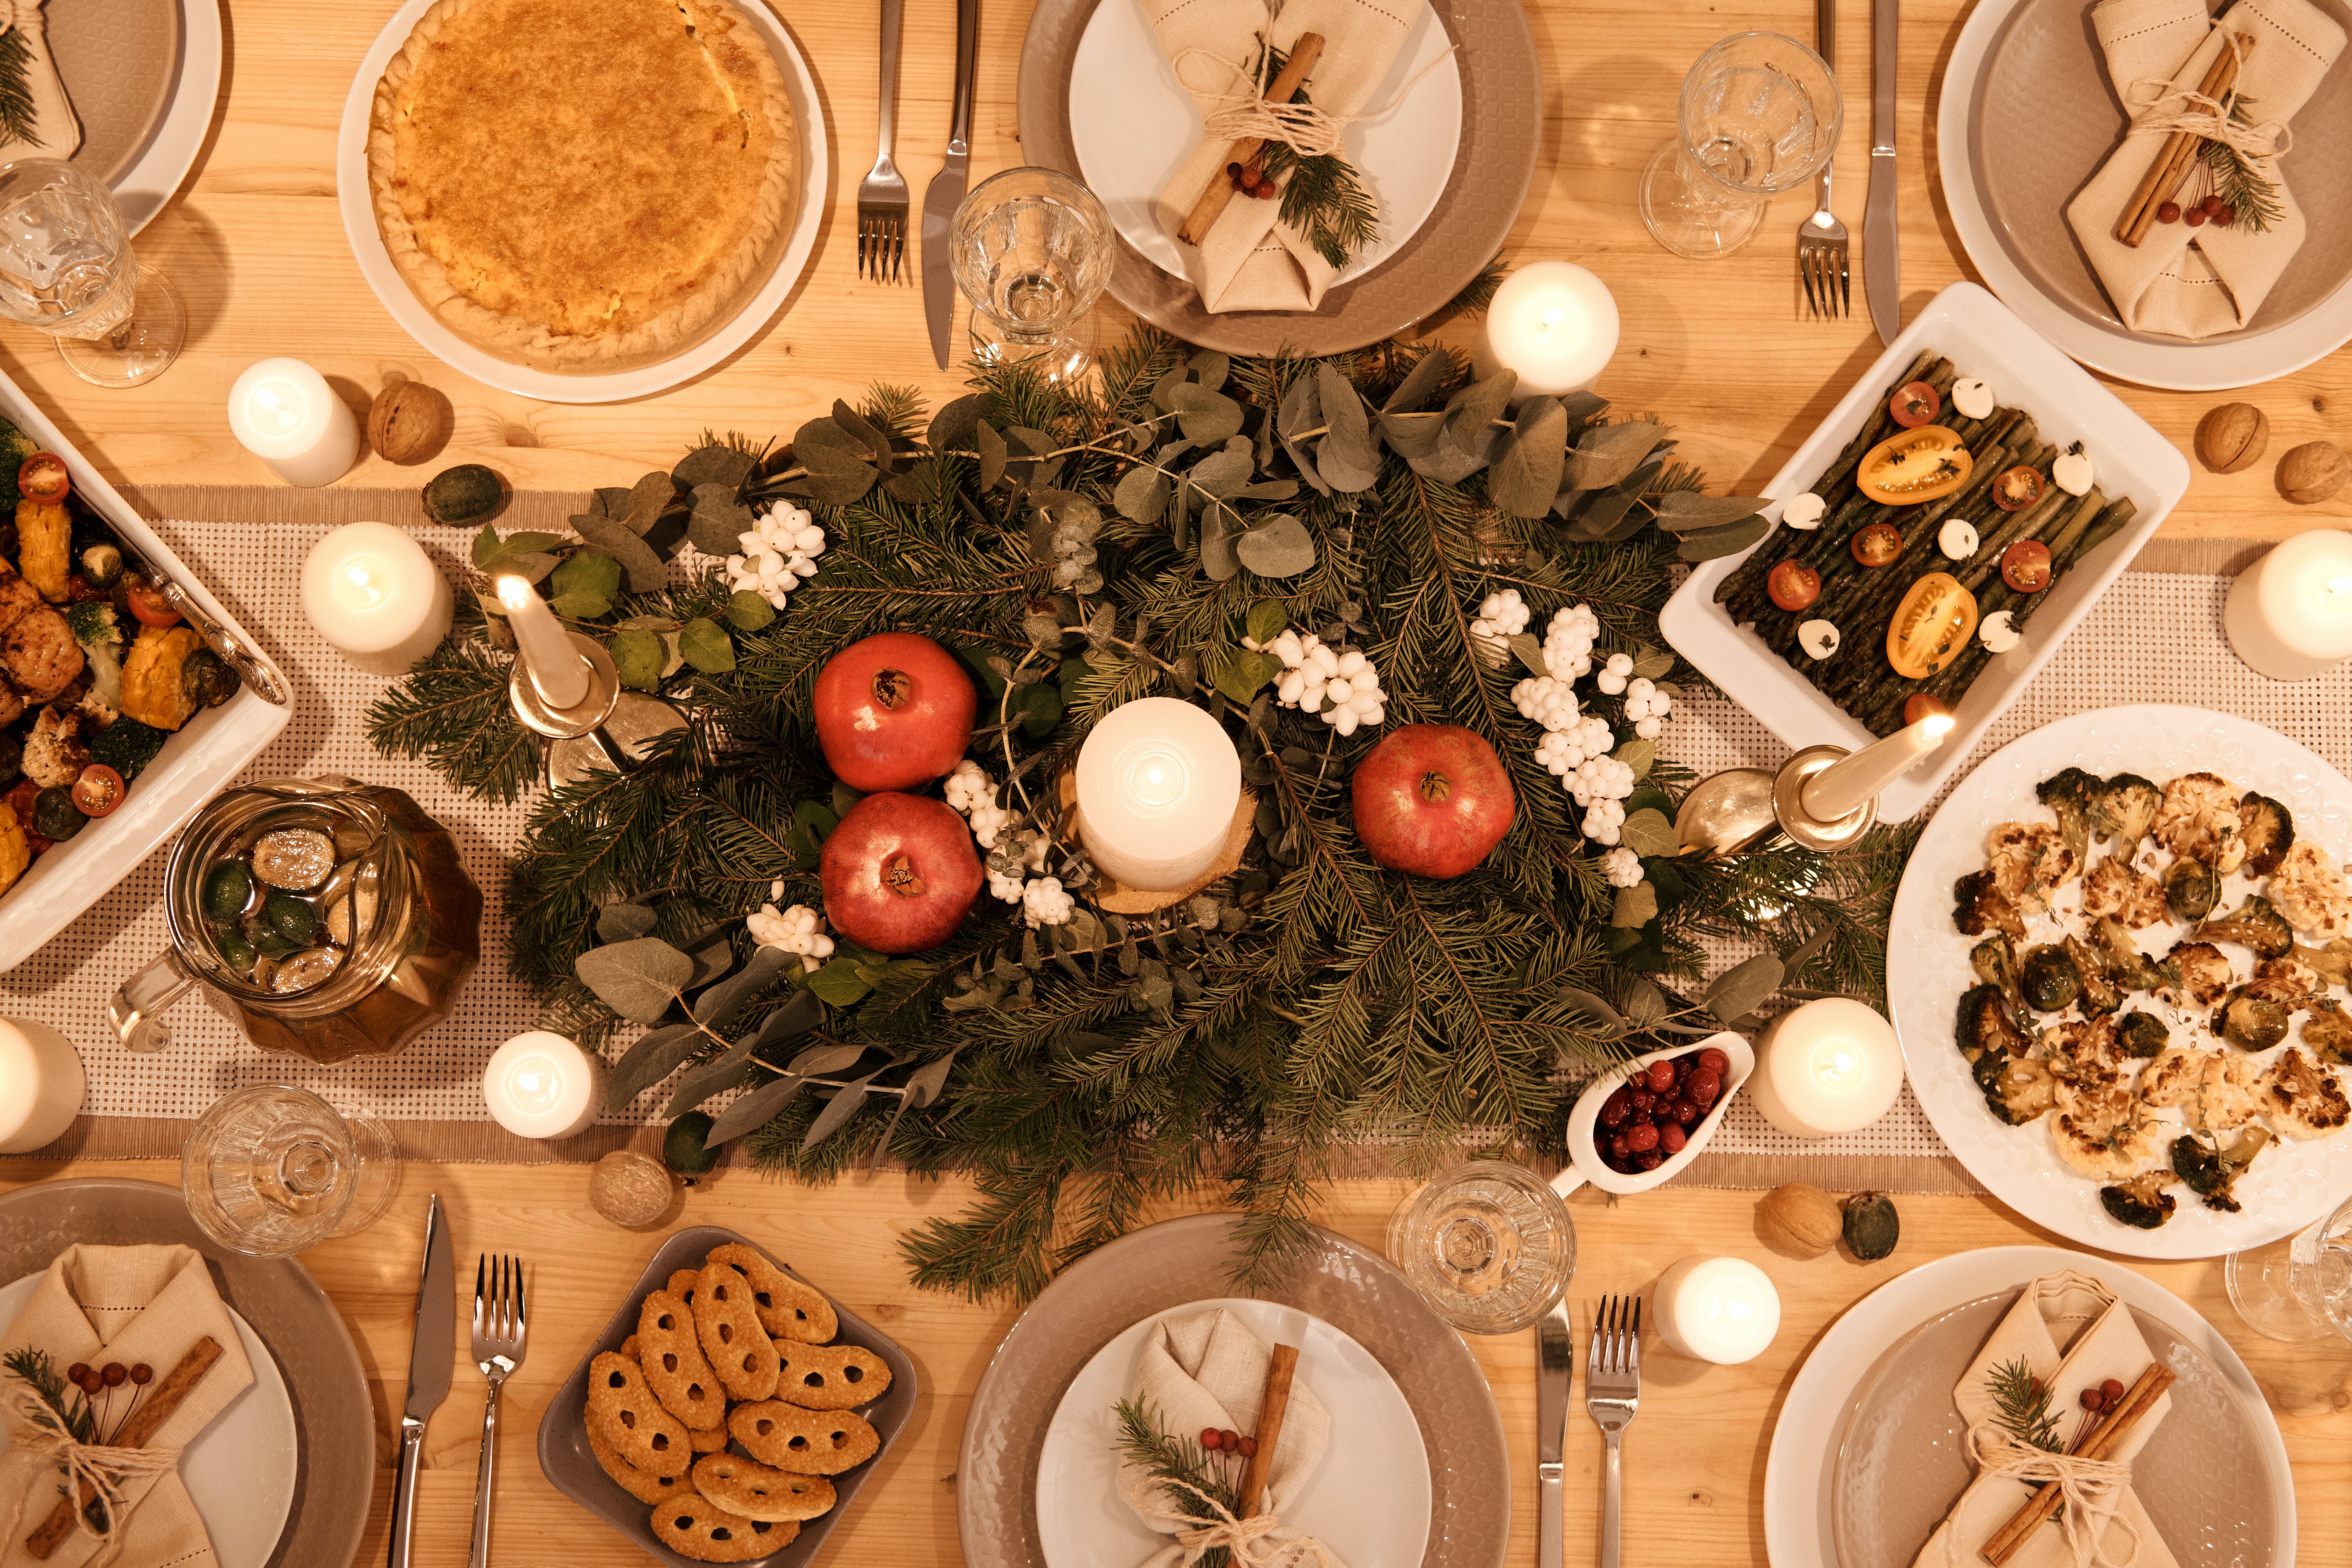 Le dîner de Noël, image de Nicole Michalou